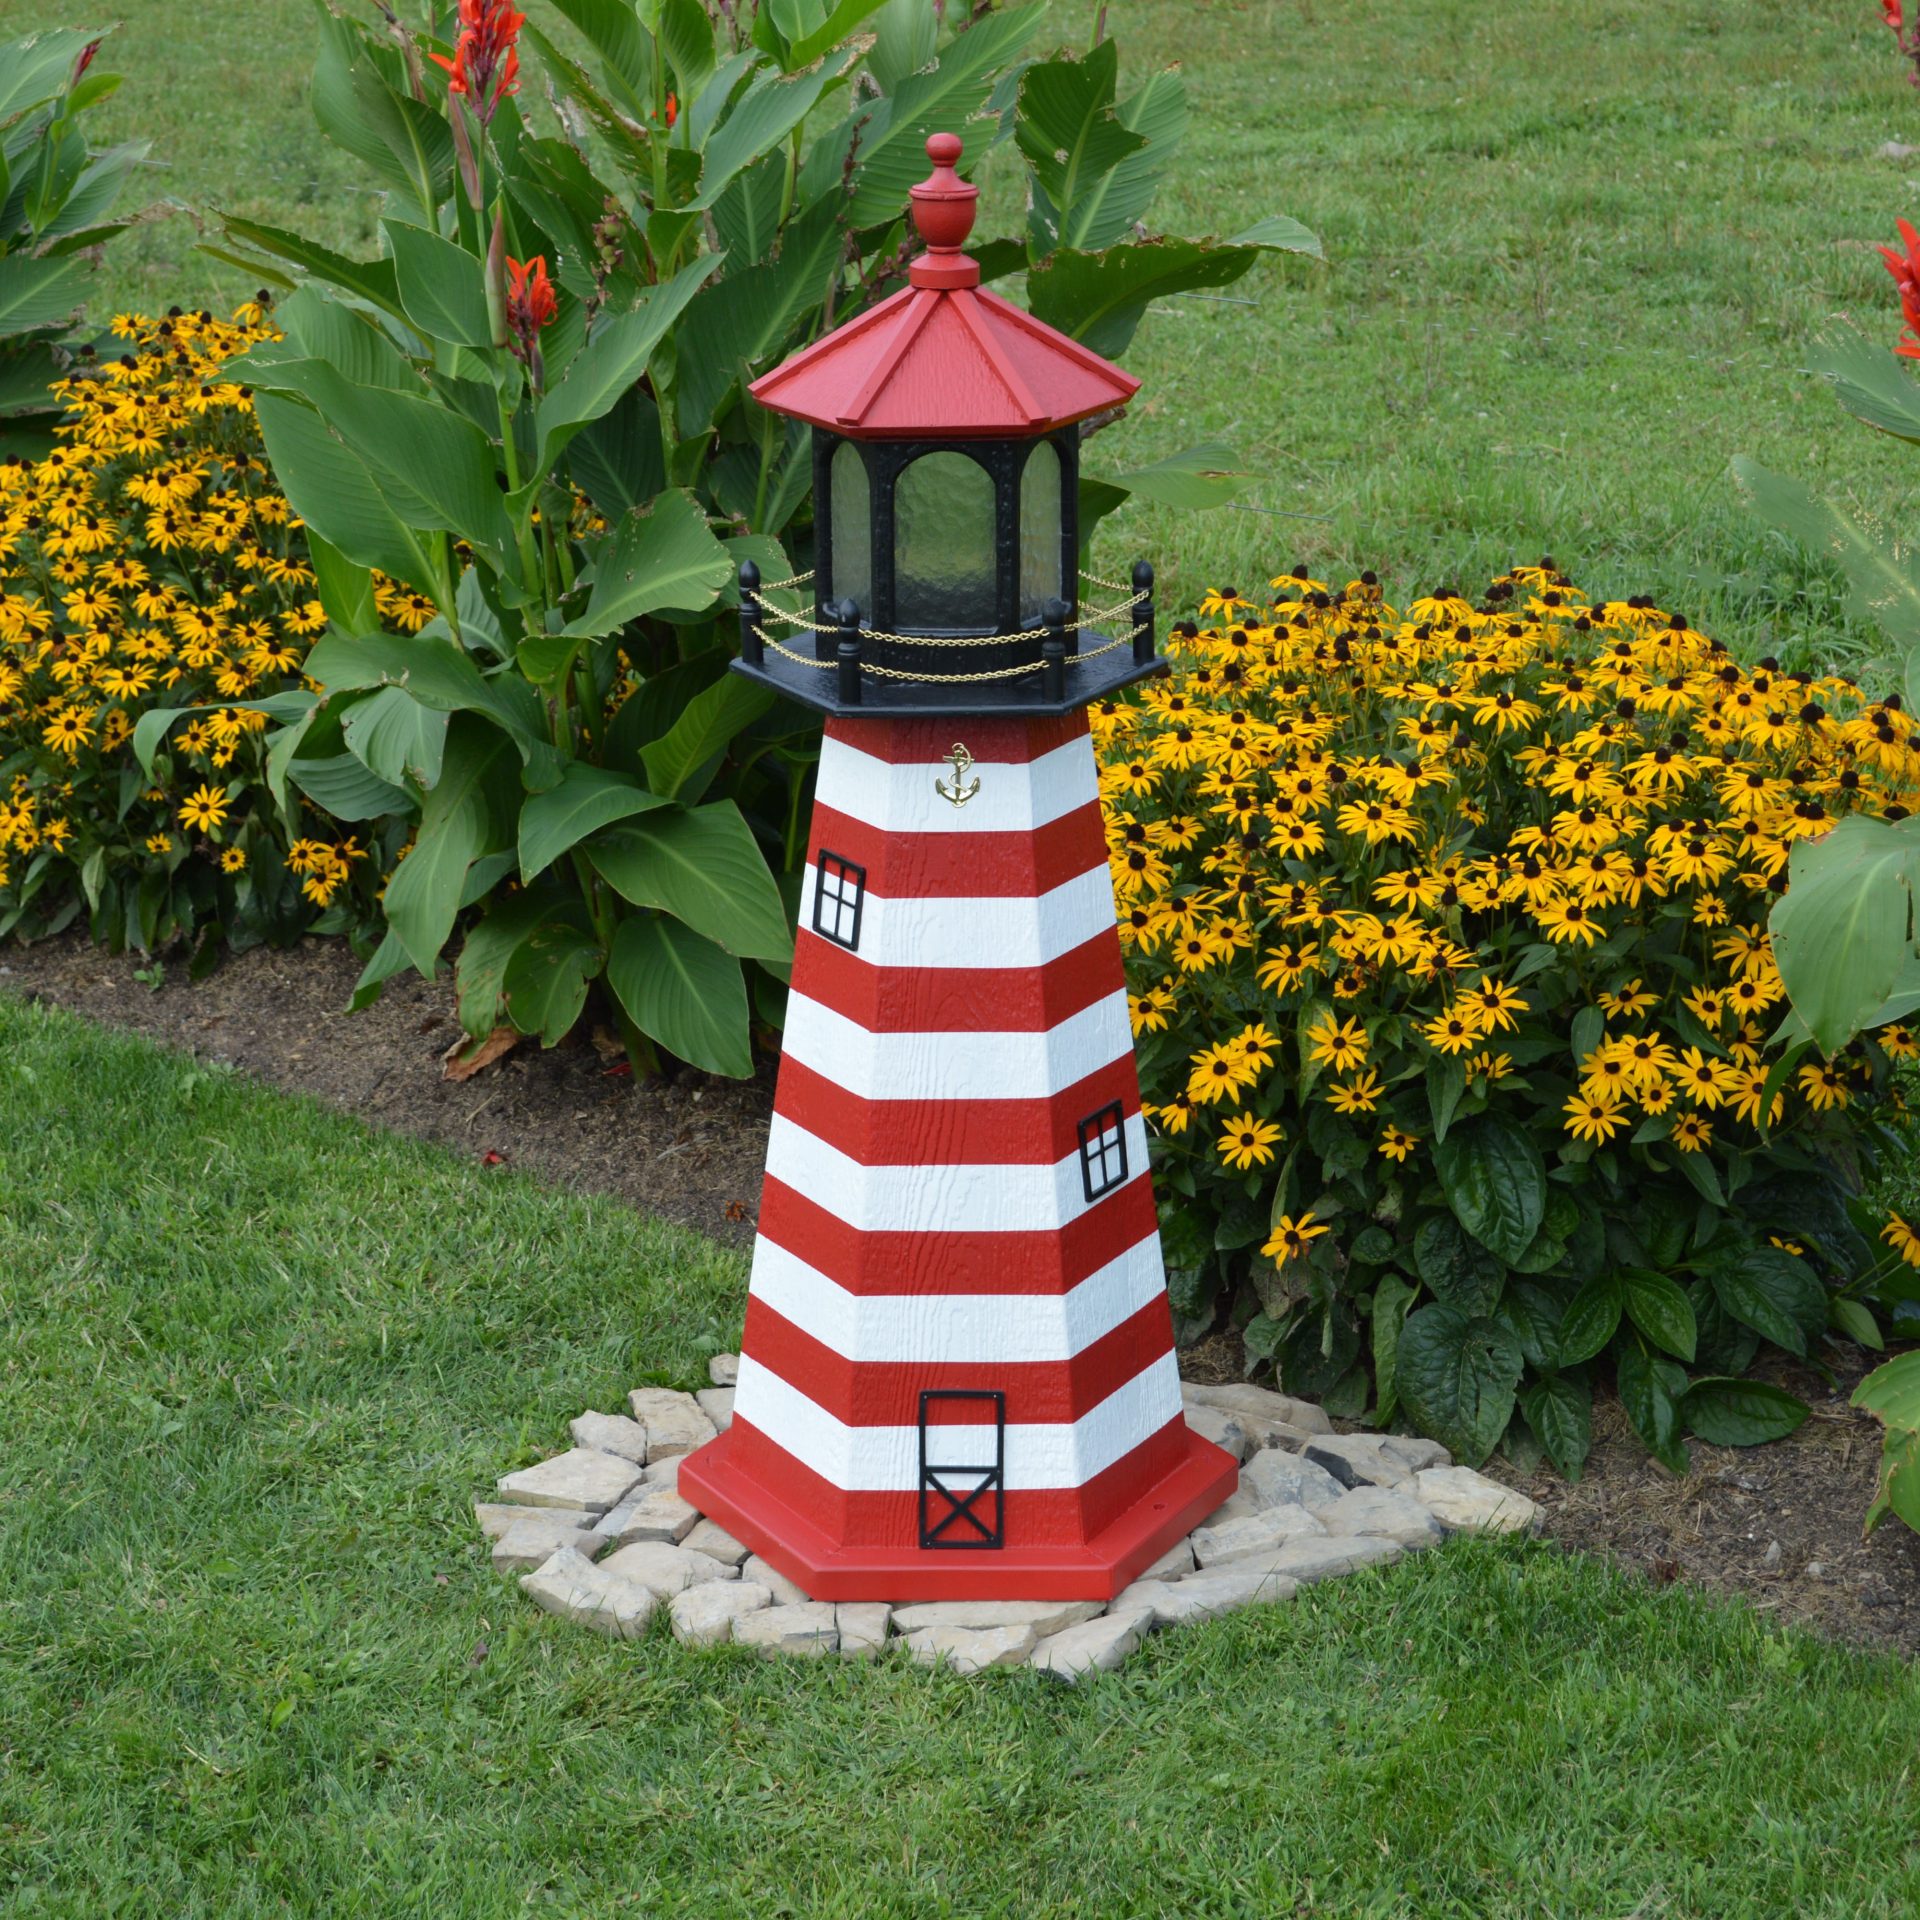 Replica Lighthouse